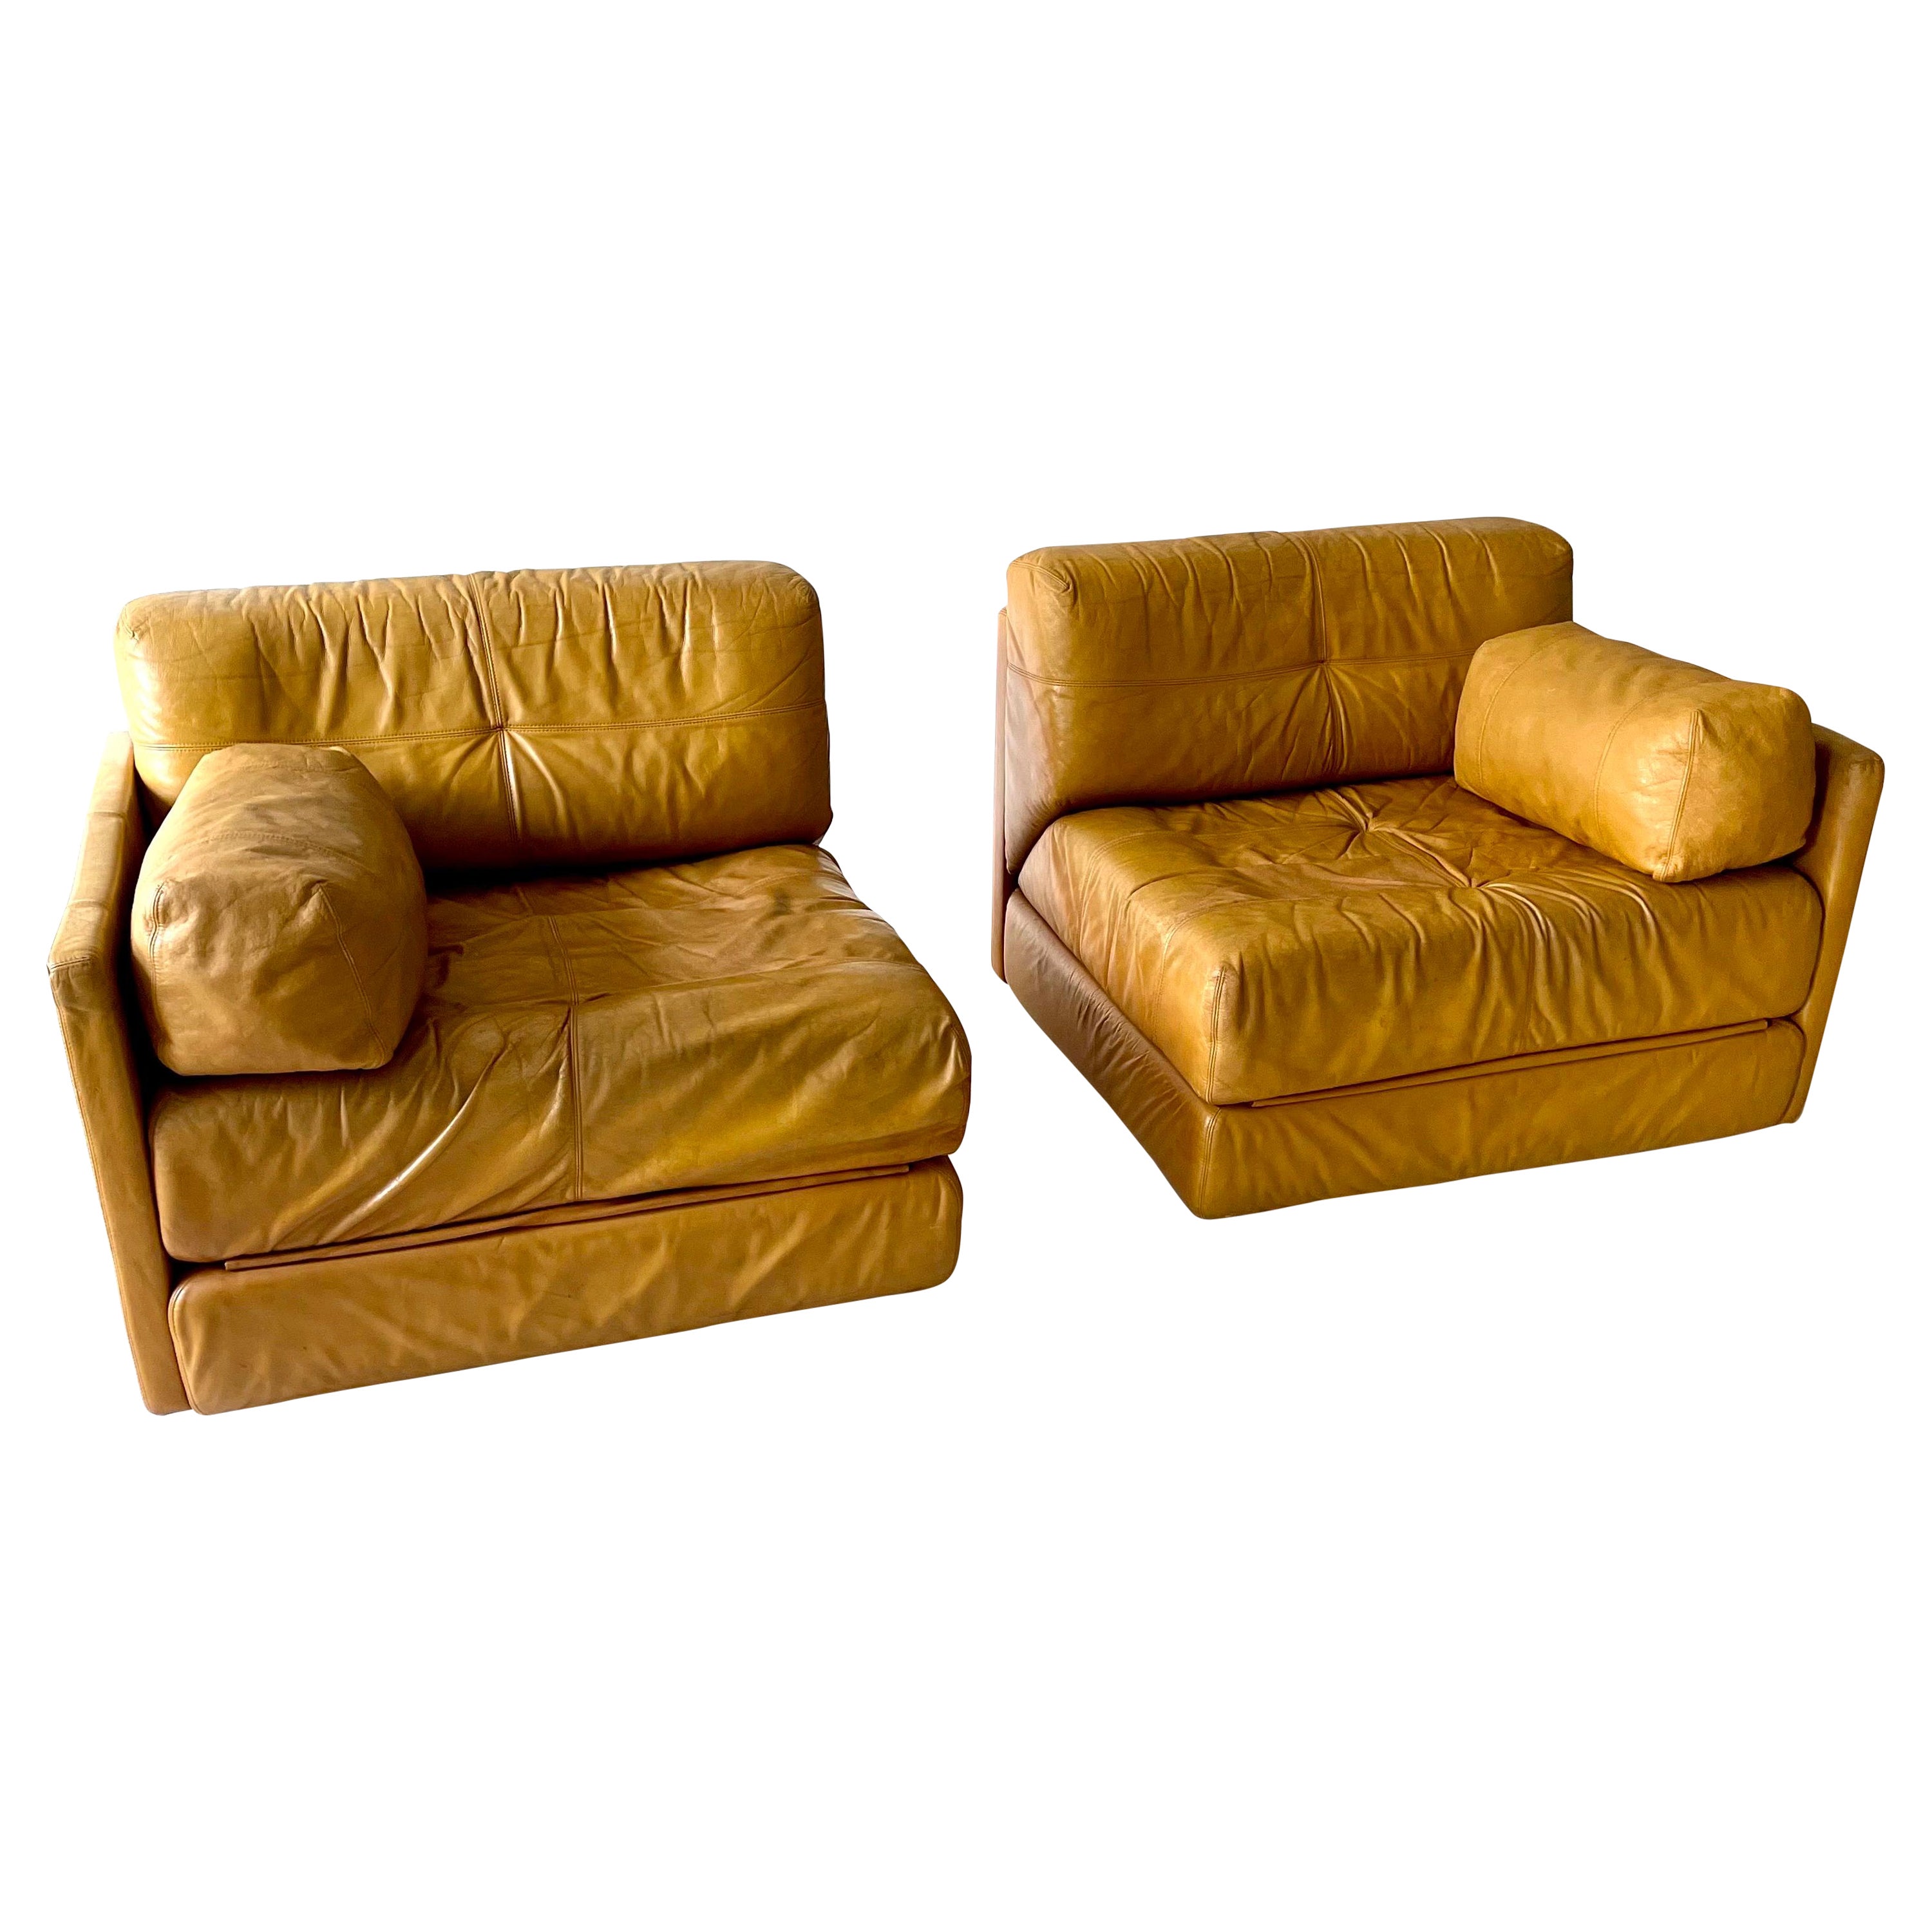 Wittmann Atrium Cognac Leather Pair Lounge Chairs, 1970s For Sale